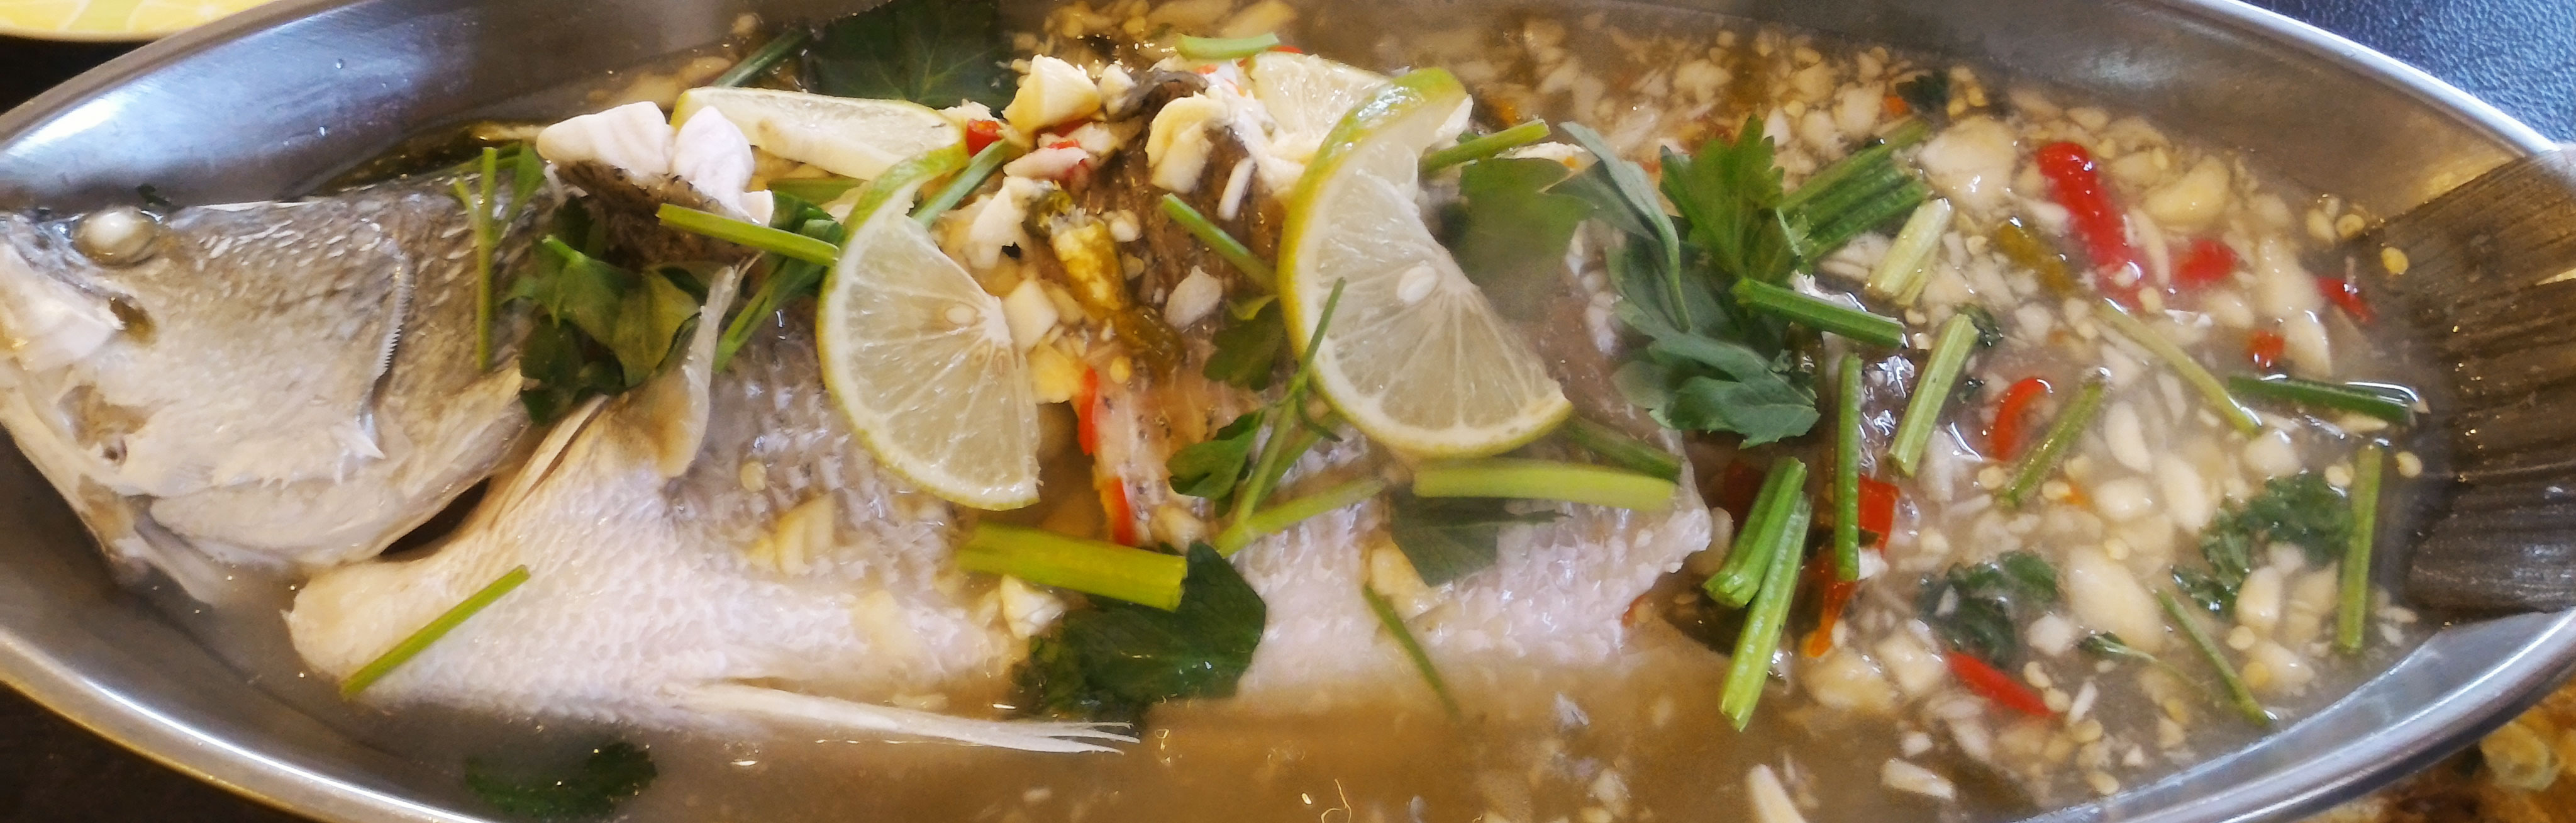 Menu Ikan Siakap Stim Limau Versi Thai